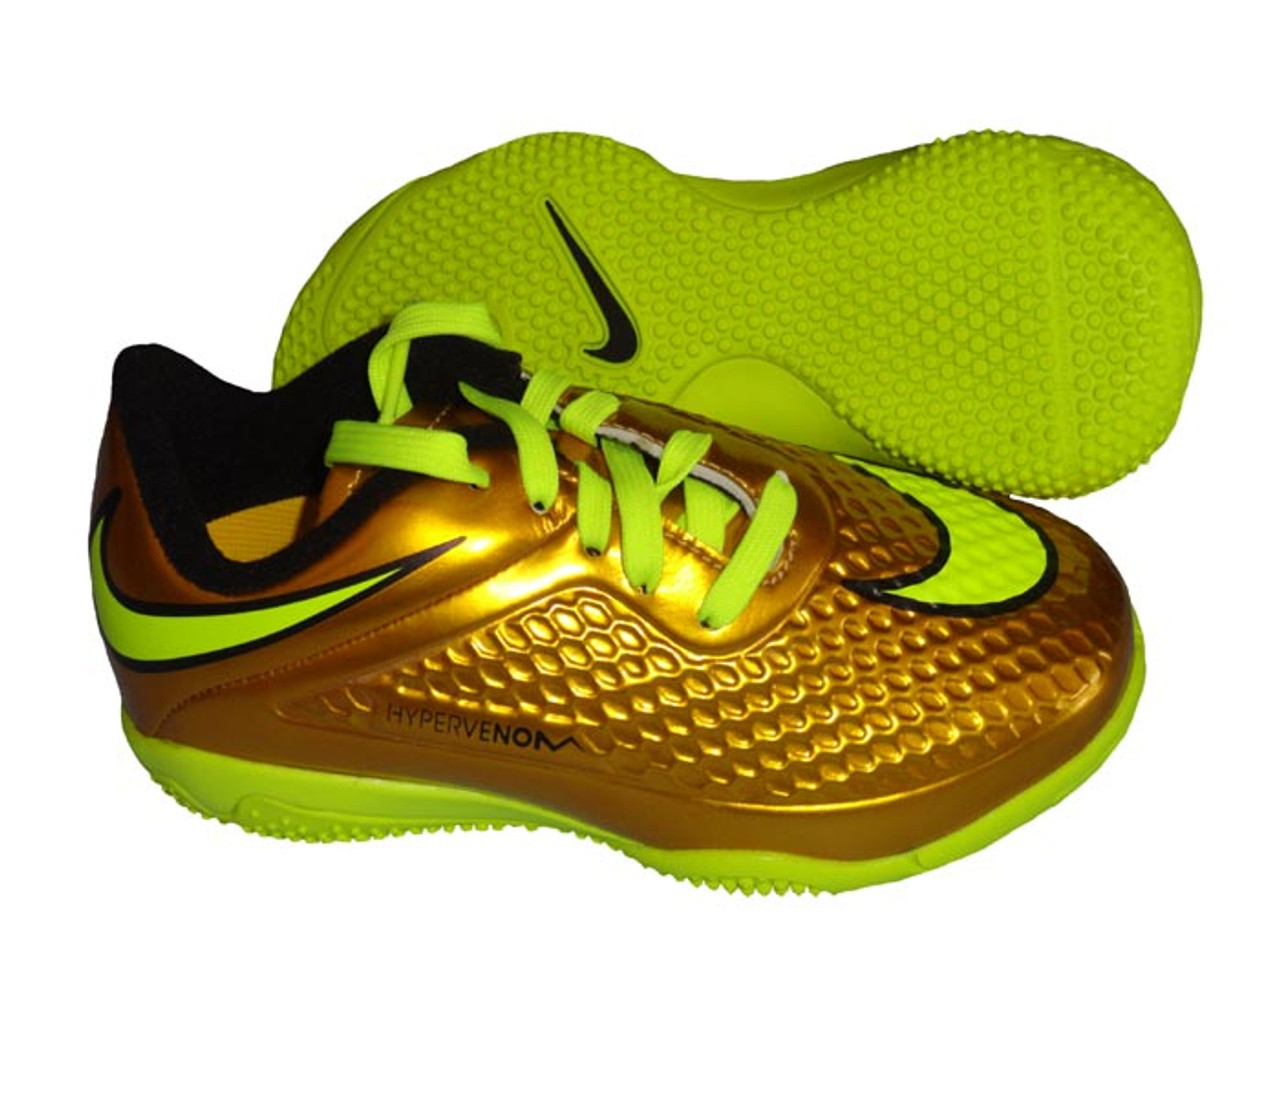 Tenis de Futbol Nike Hypervenom X Phelon 3 TF. Netshoes